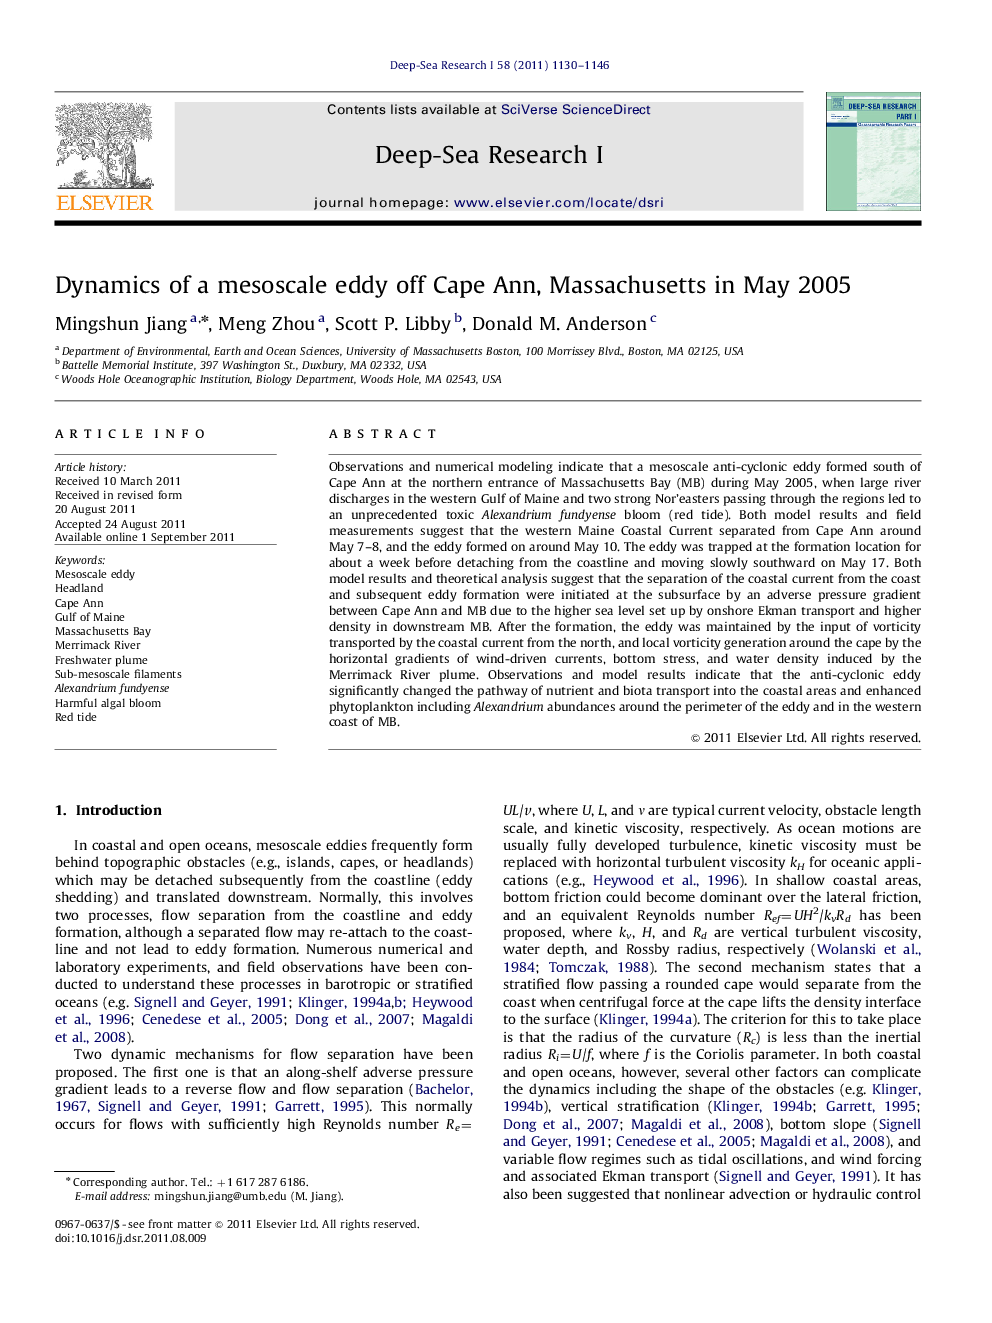 Dynamics of a mesoscale eddy off Cape Ann, Massachusetts in May 2005